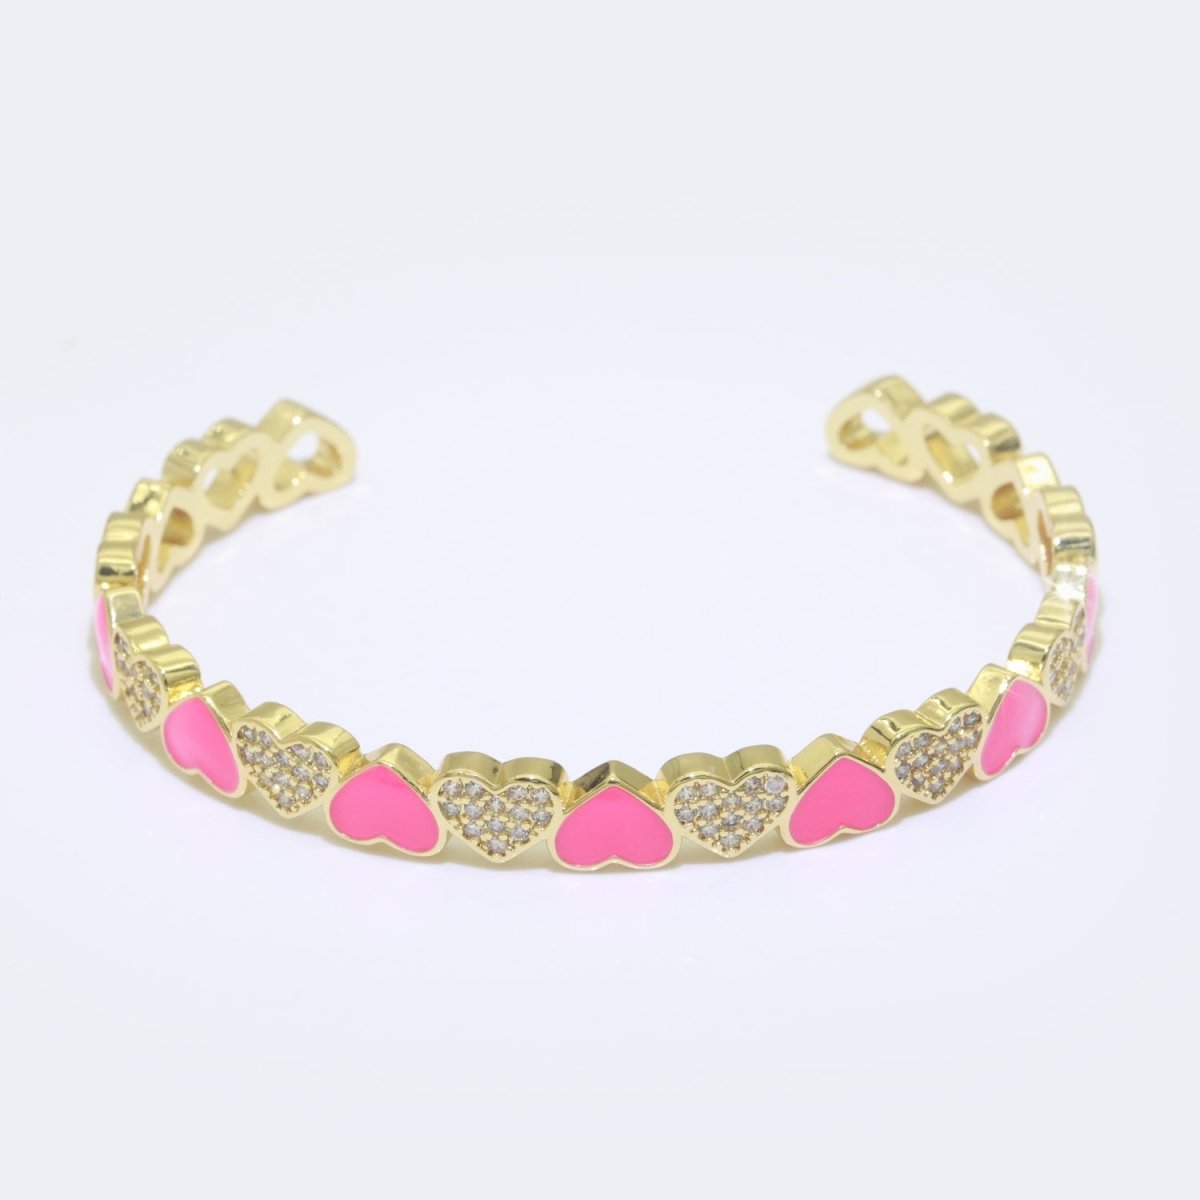 Pink Heart Enamel 14k Gold Filled Adjustable Bangle, Gold Cuff Bangle Bracelet Micro Pave Jewelry - DLUXCA